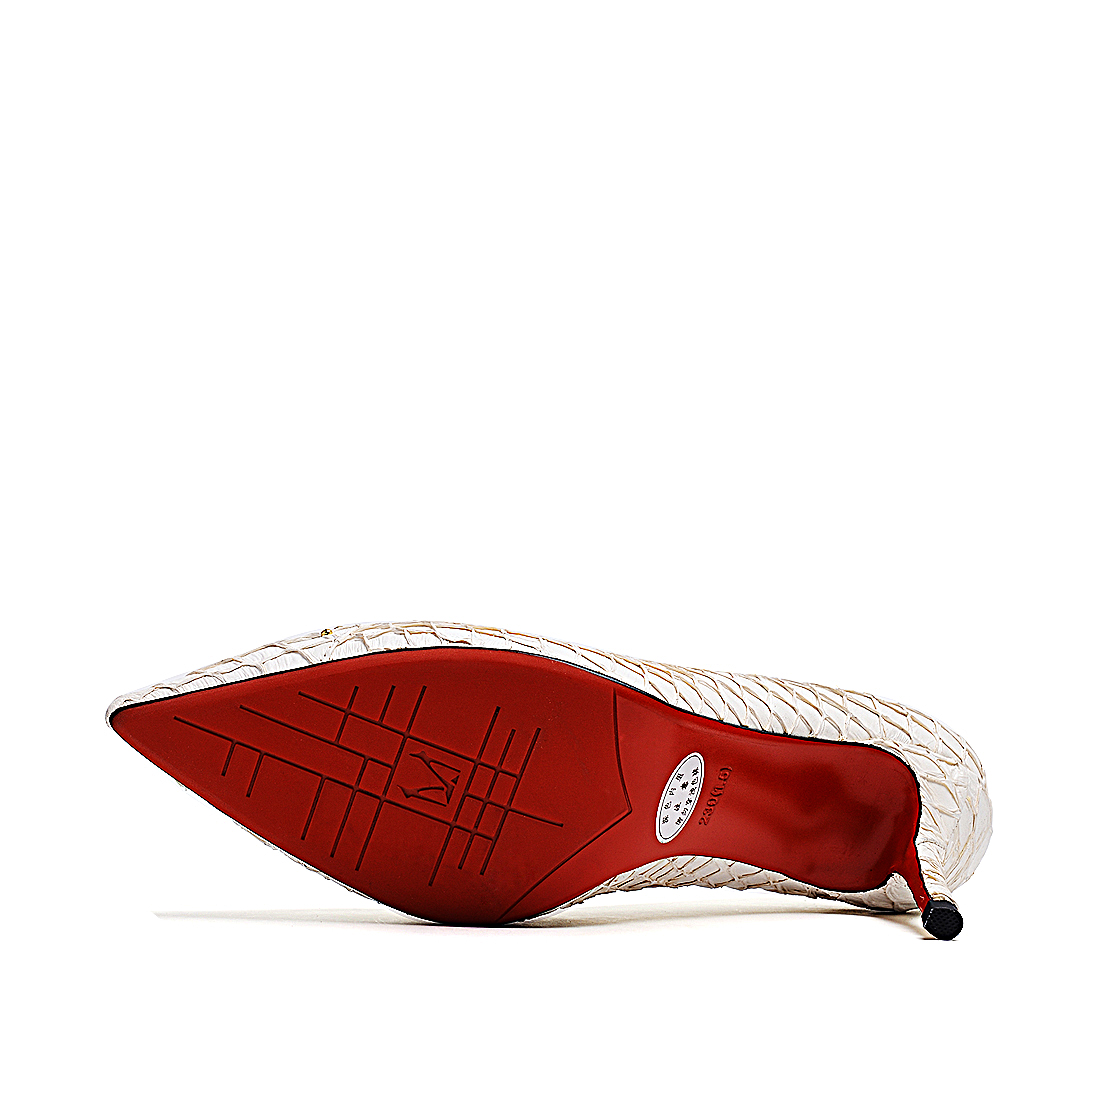 [Run&Heels]性感风金属装饰进口开边珠牛皮单鞋(尺码标准)
编号：A3848D1A74